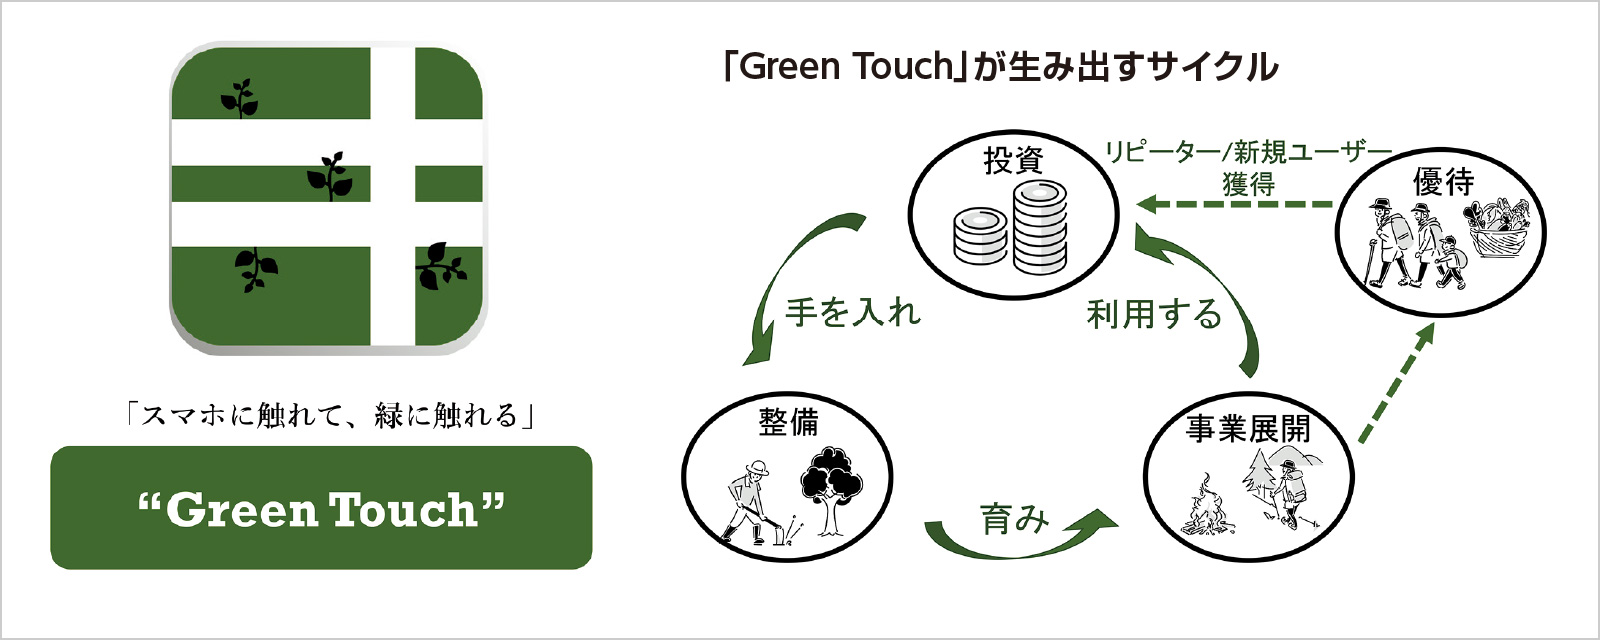 kumonectaのプレゼン「Green Touch」